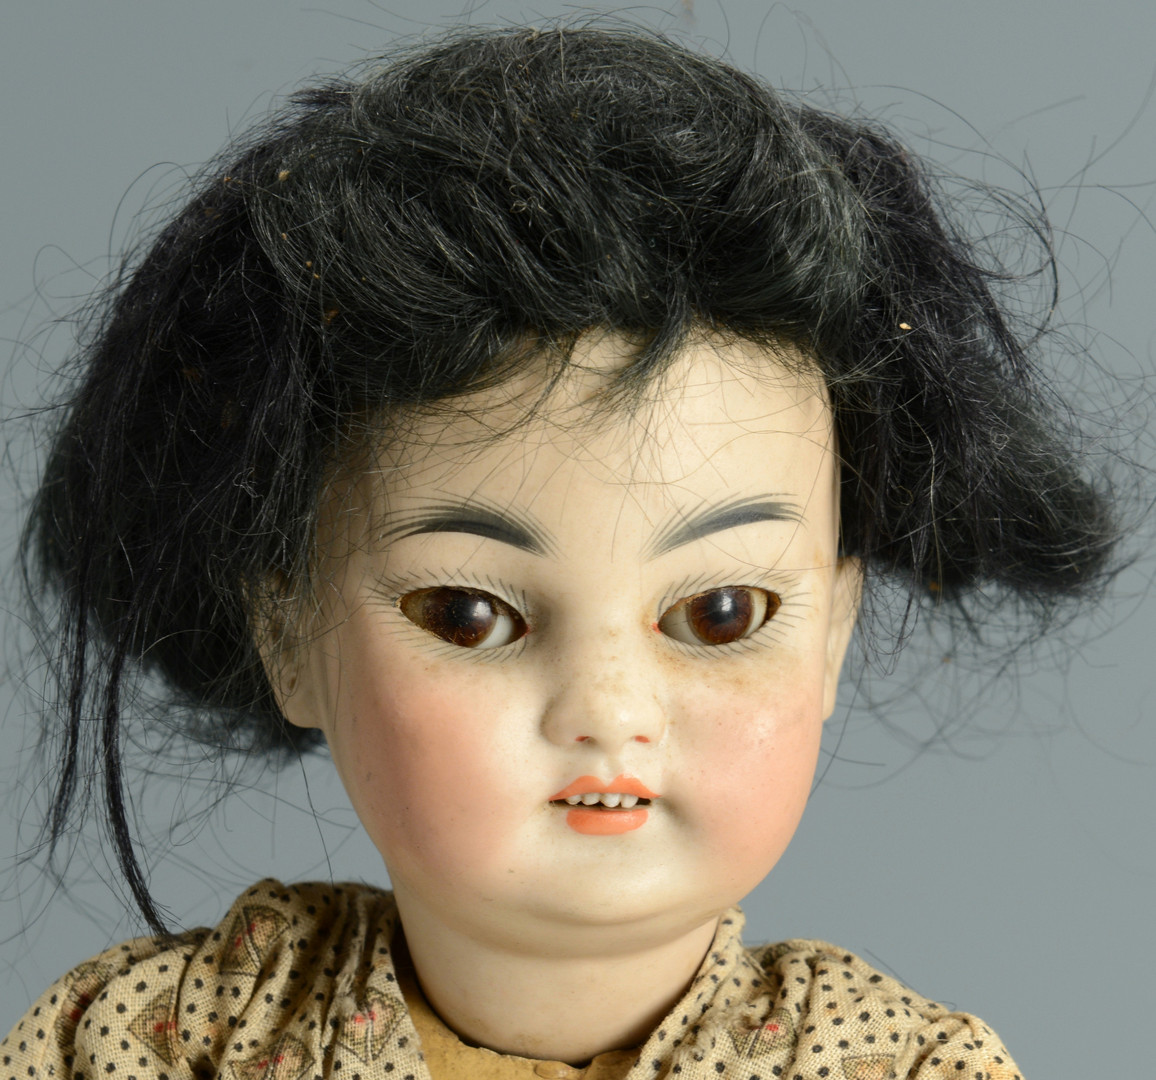 Lot 524: Simon & Halbig Oriental Doll